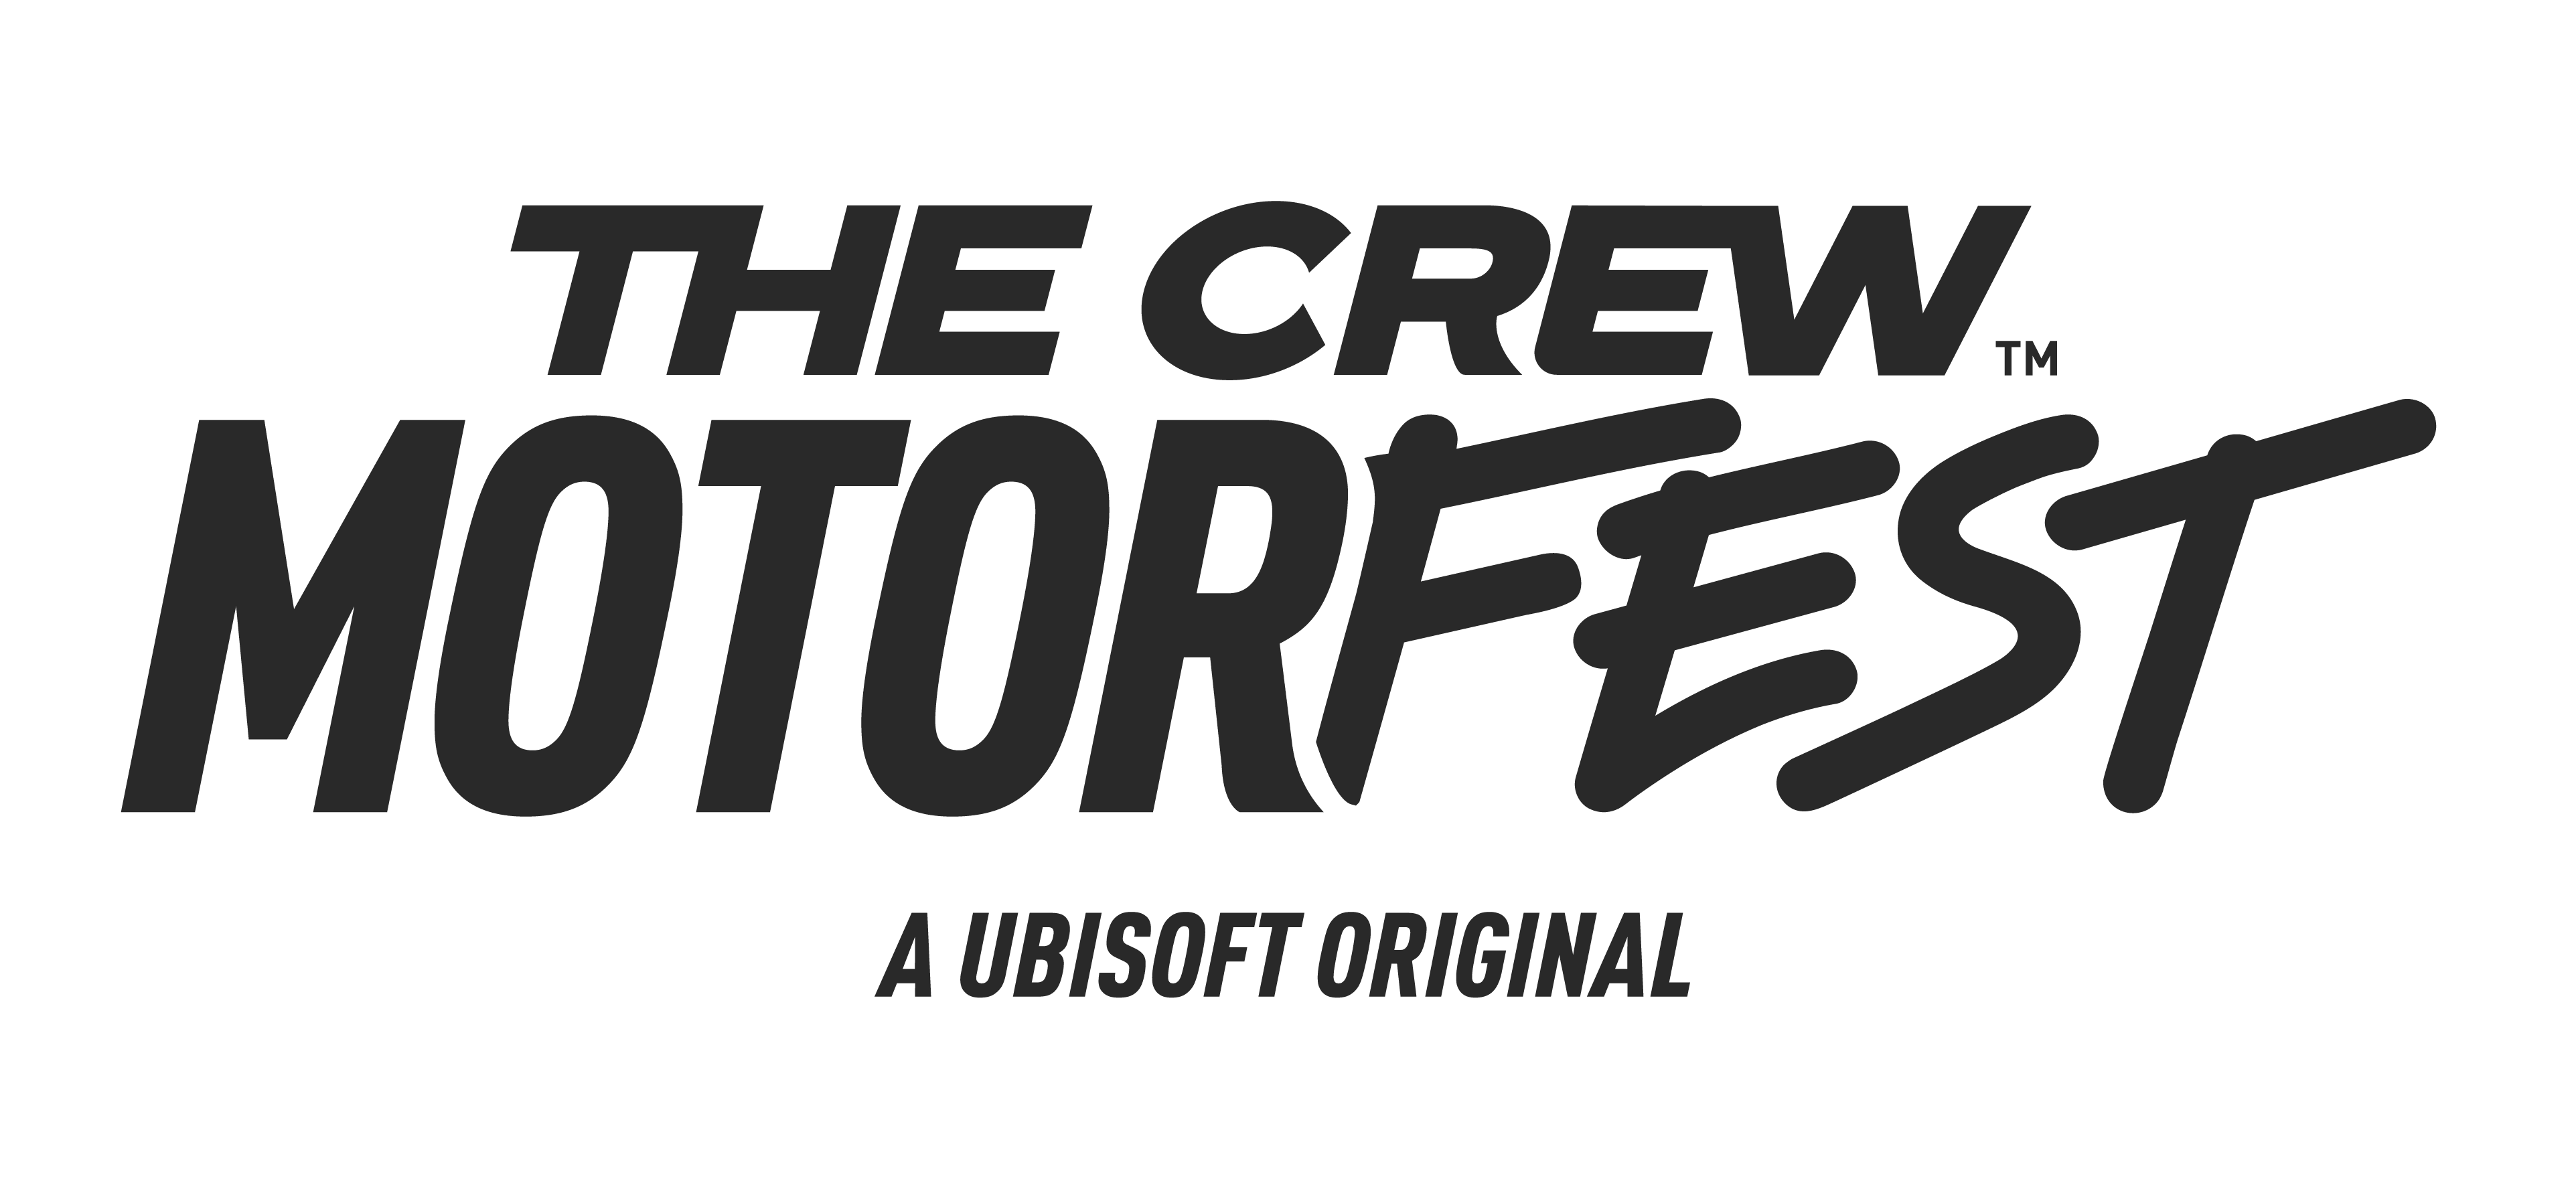 The Crew Motorfest Special Edition GameStop Exclusive - PS5